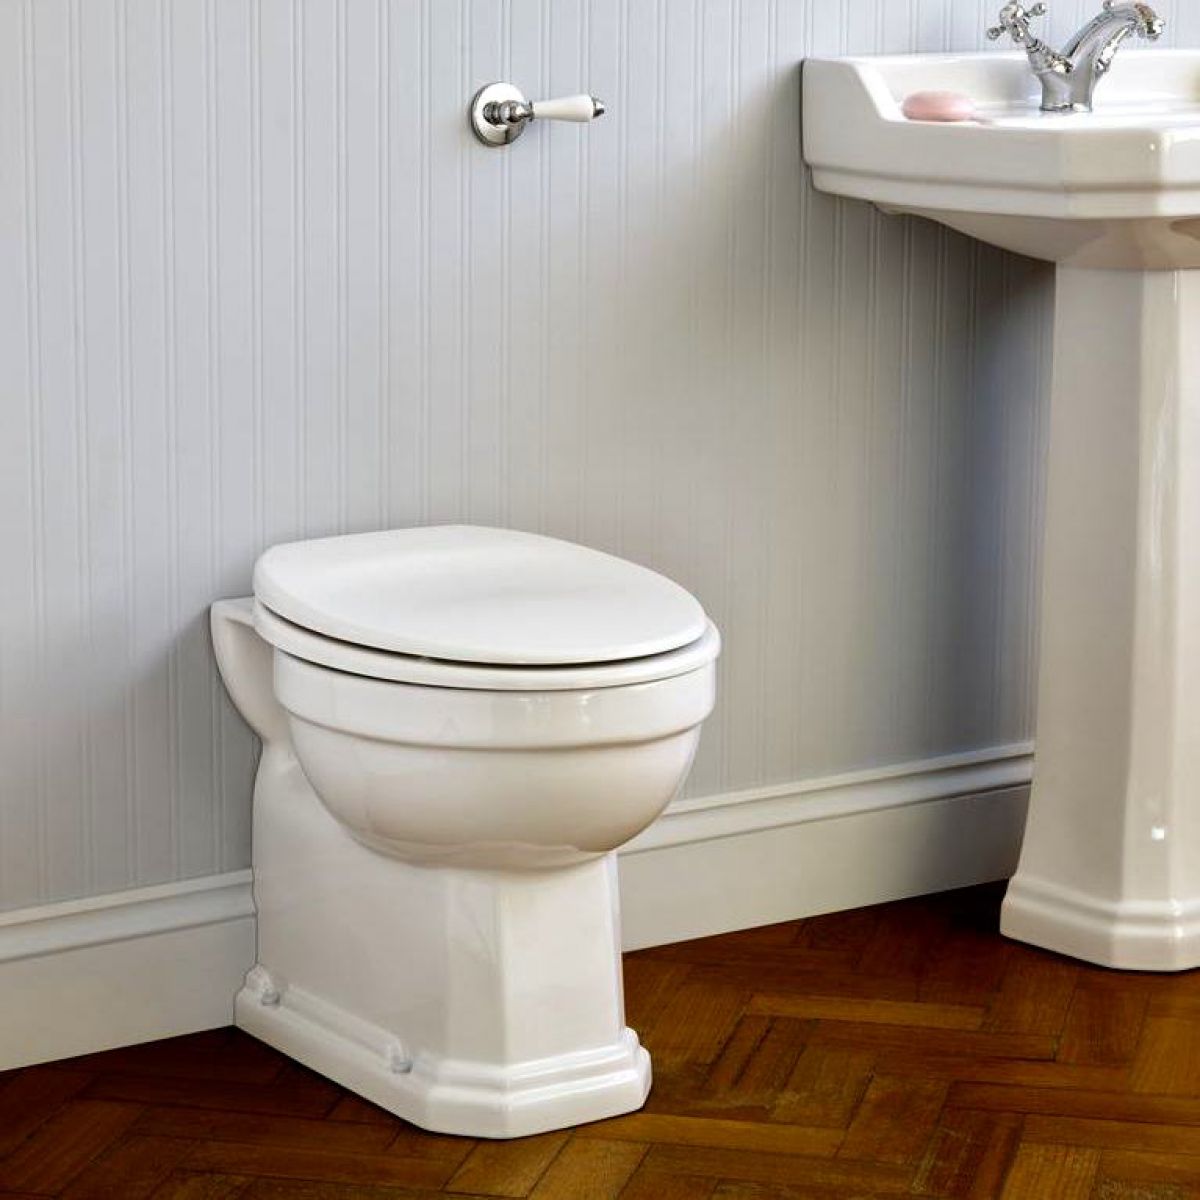 Ideal Standard Waverley Back to Wall Toilet UK Bathrooms